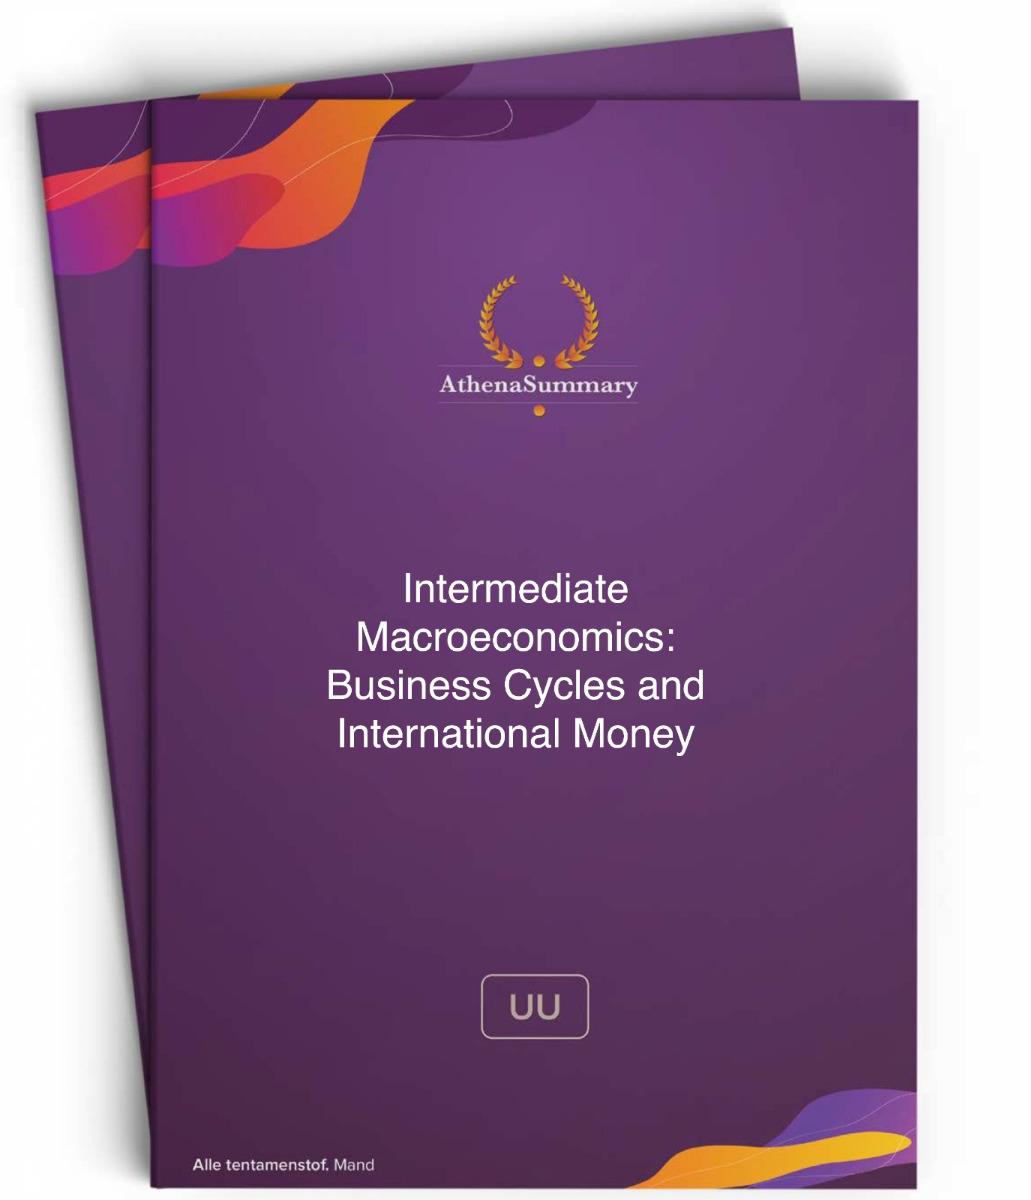 Literature Summary: Intermediate Macroeconomics: Business Cycles and International Money